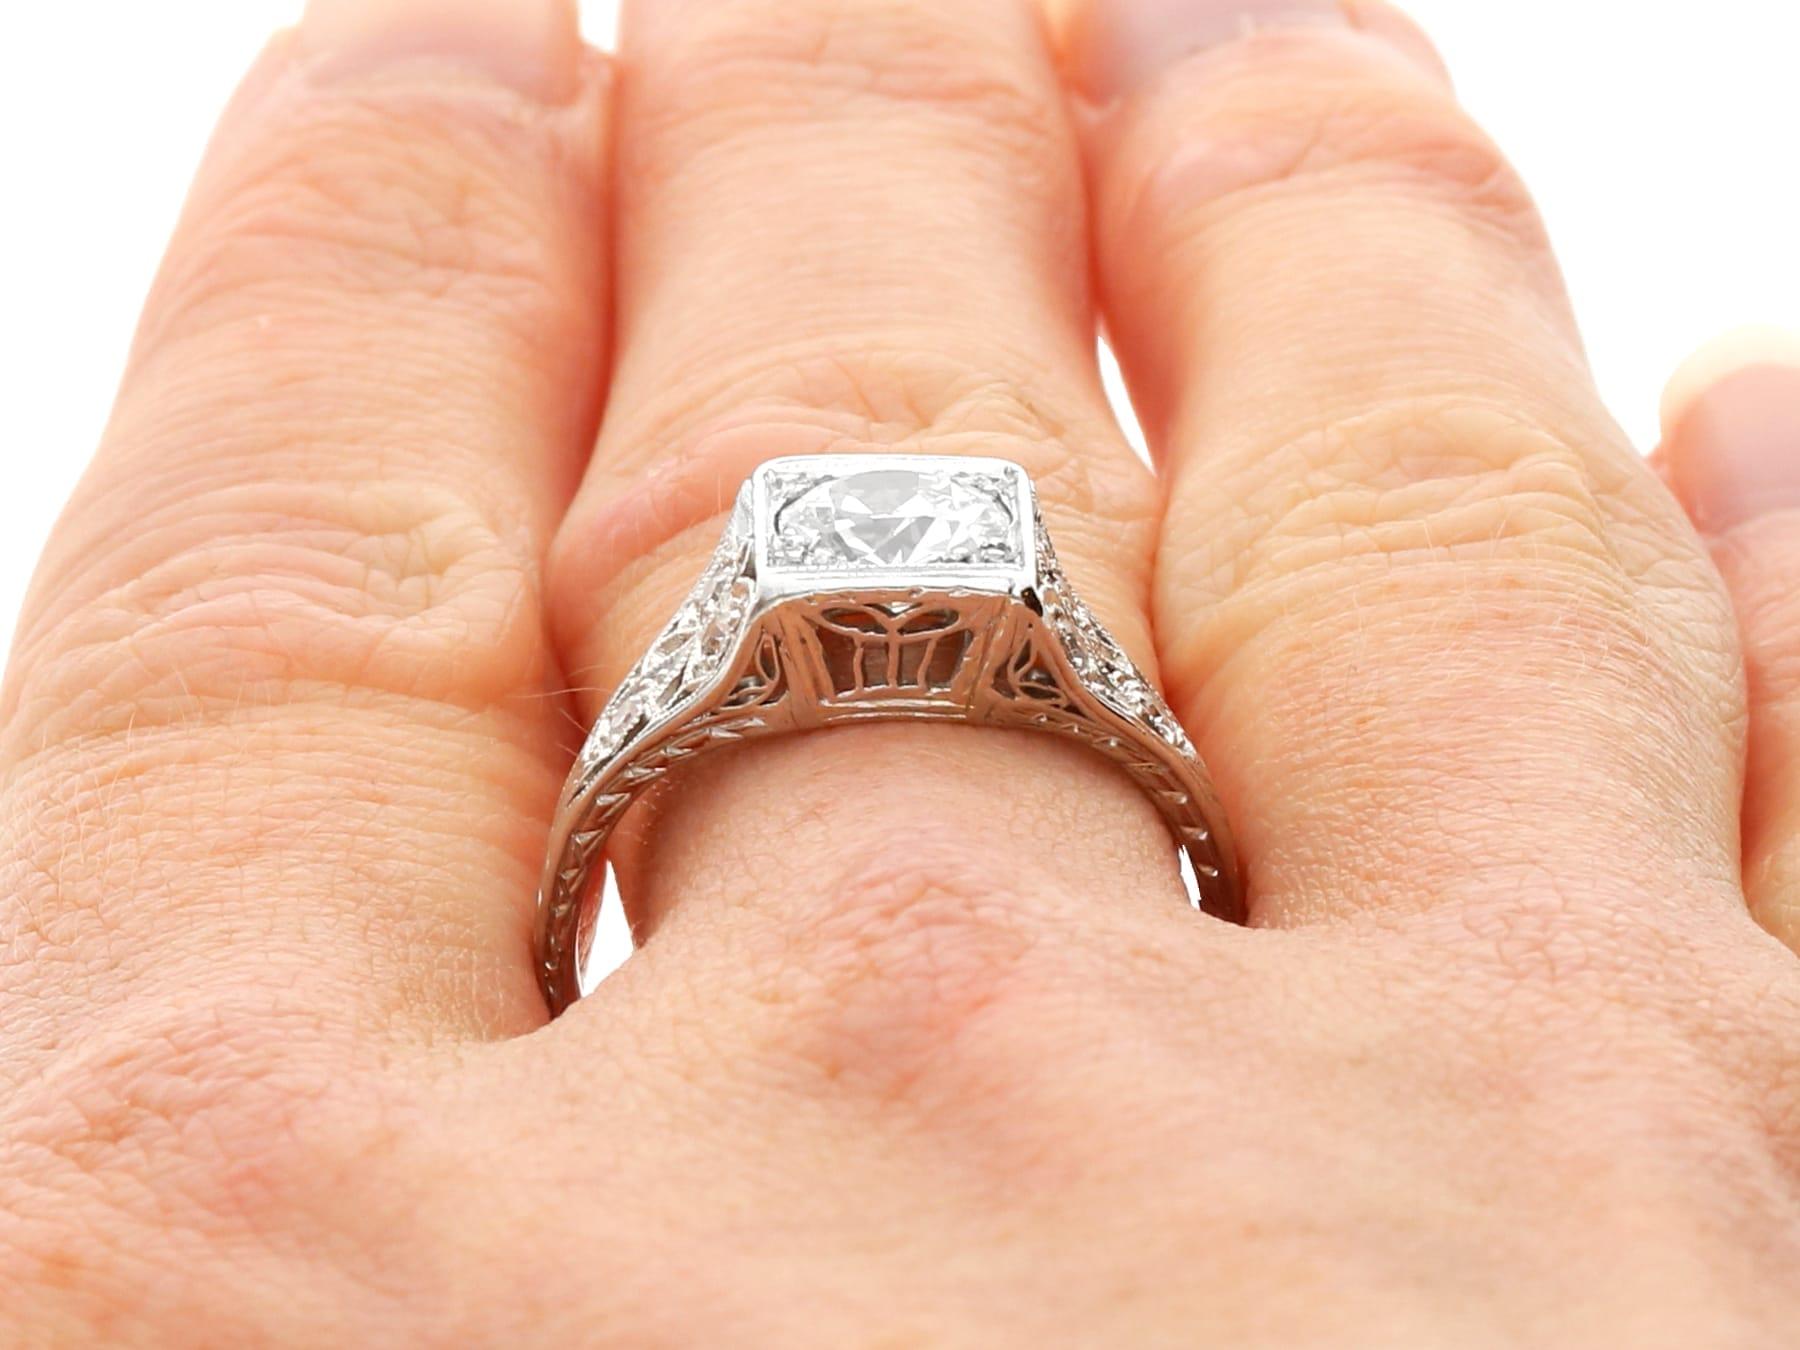 1900s Antique 1.14 Carat Diamond and Platinum Solitaire Ring For Sale 3